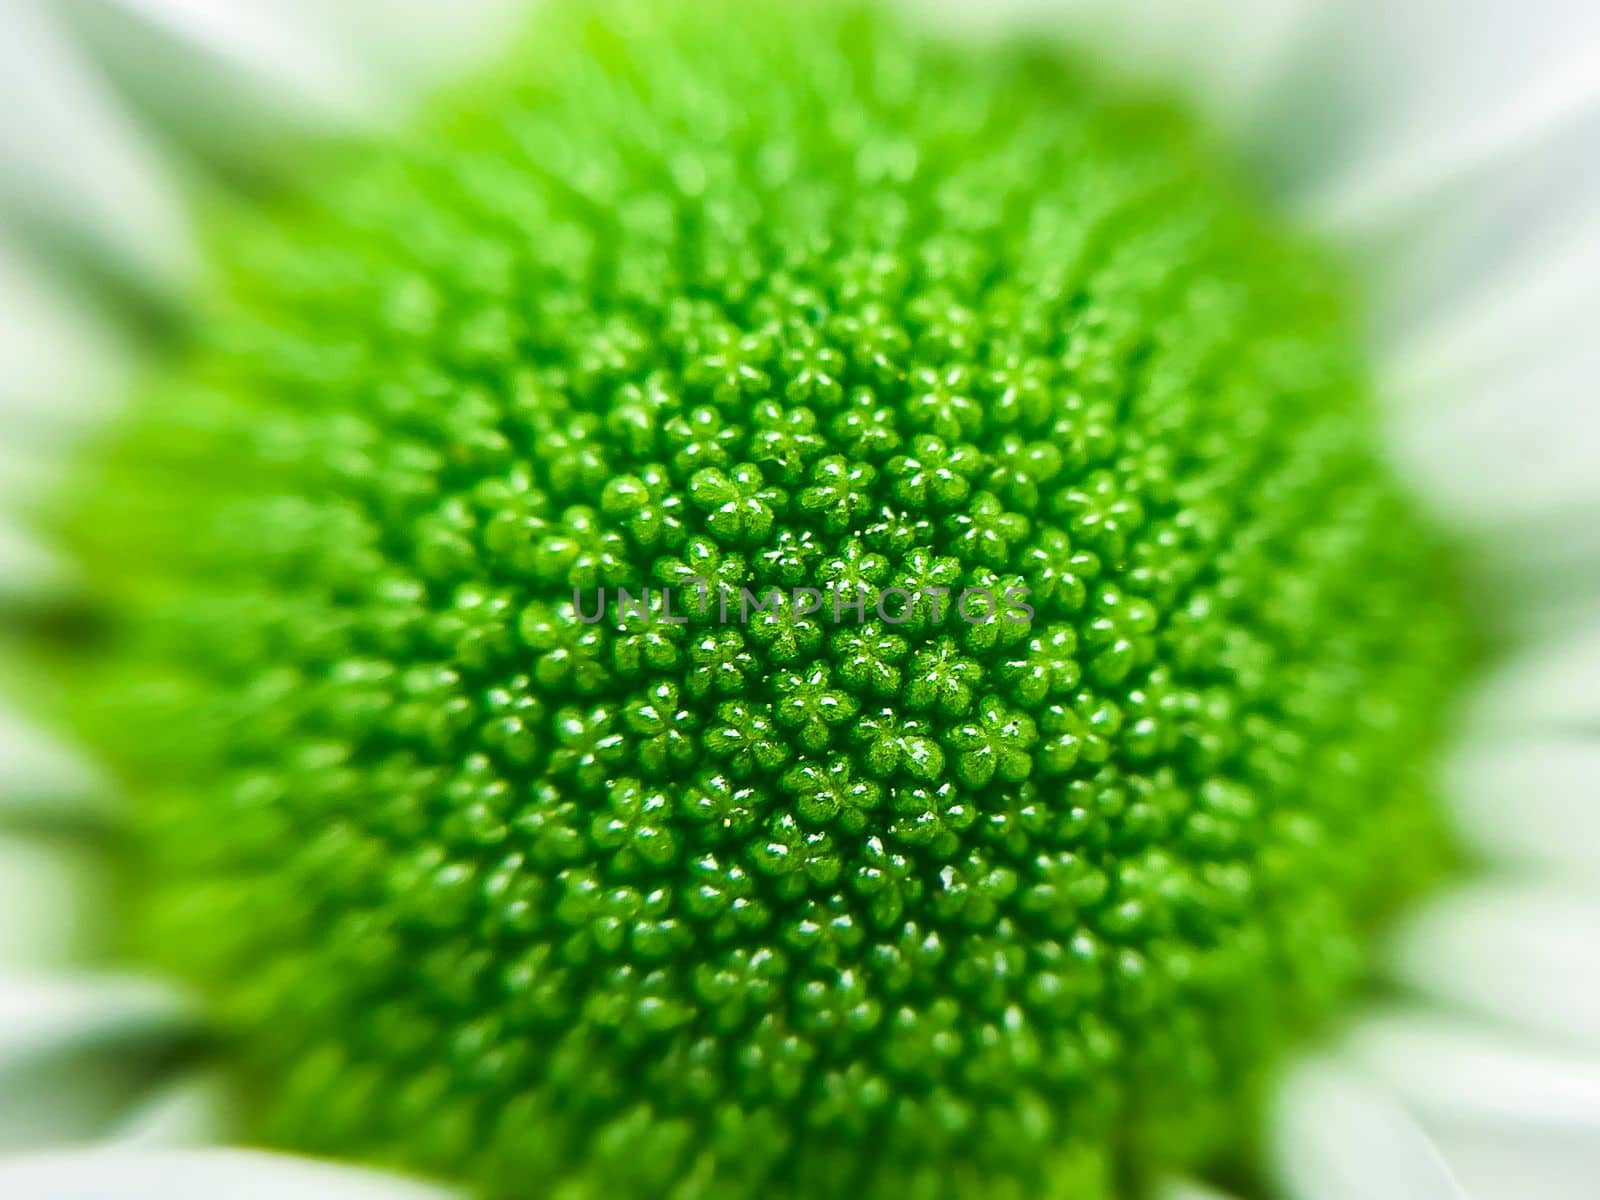 floral green macro view core of chrysanthemum close-up